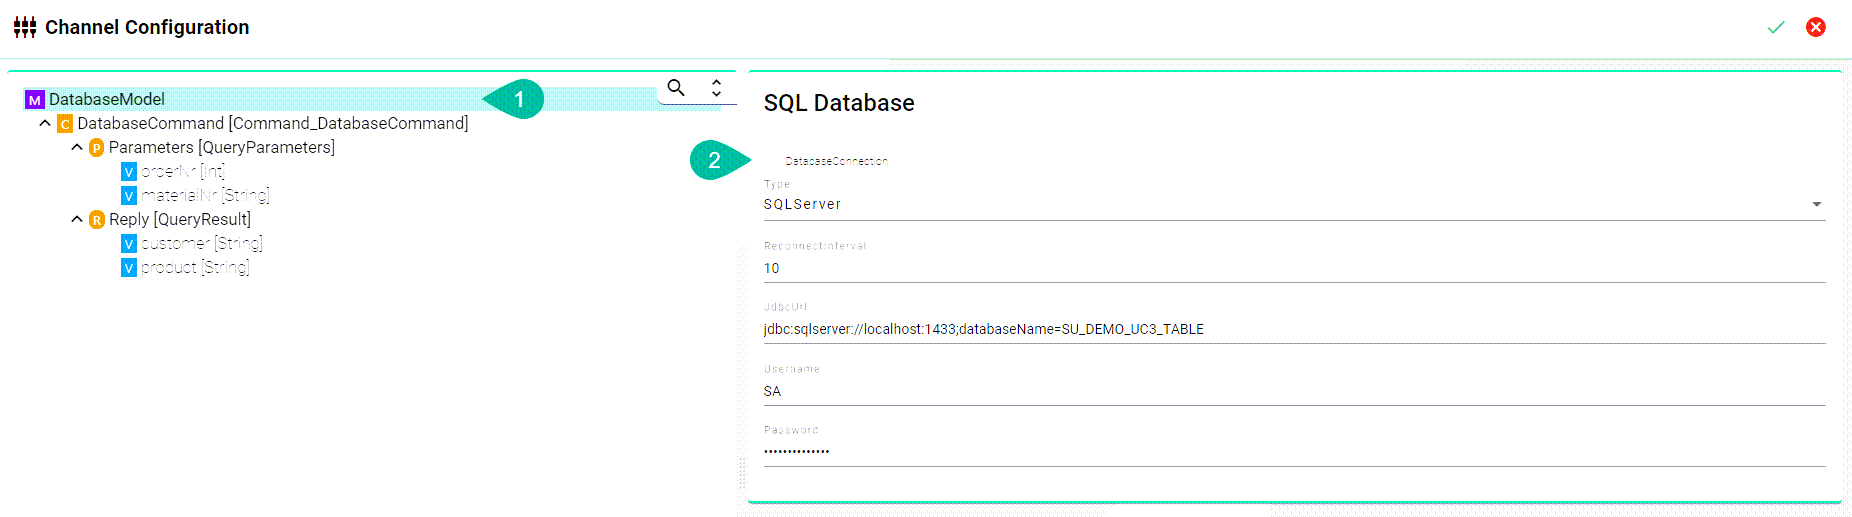 SQL Database Configuration